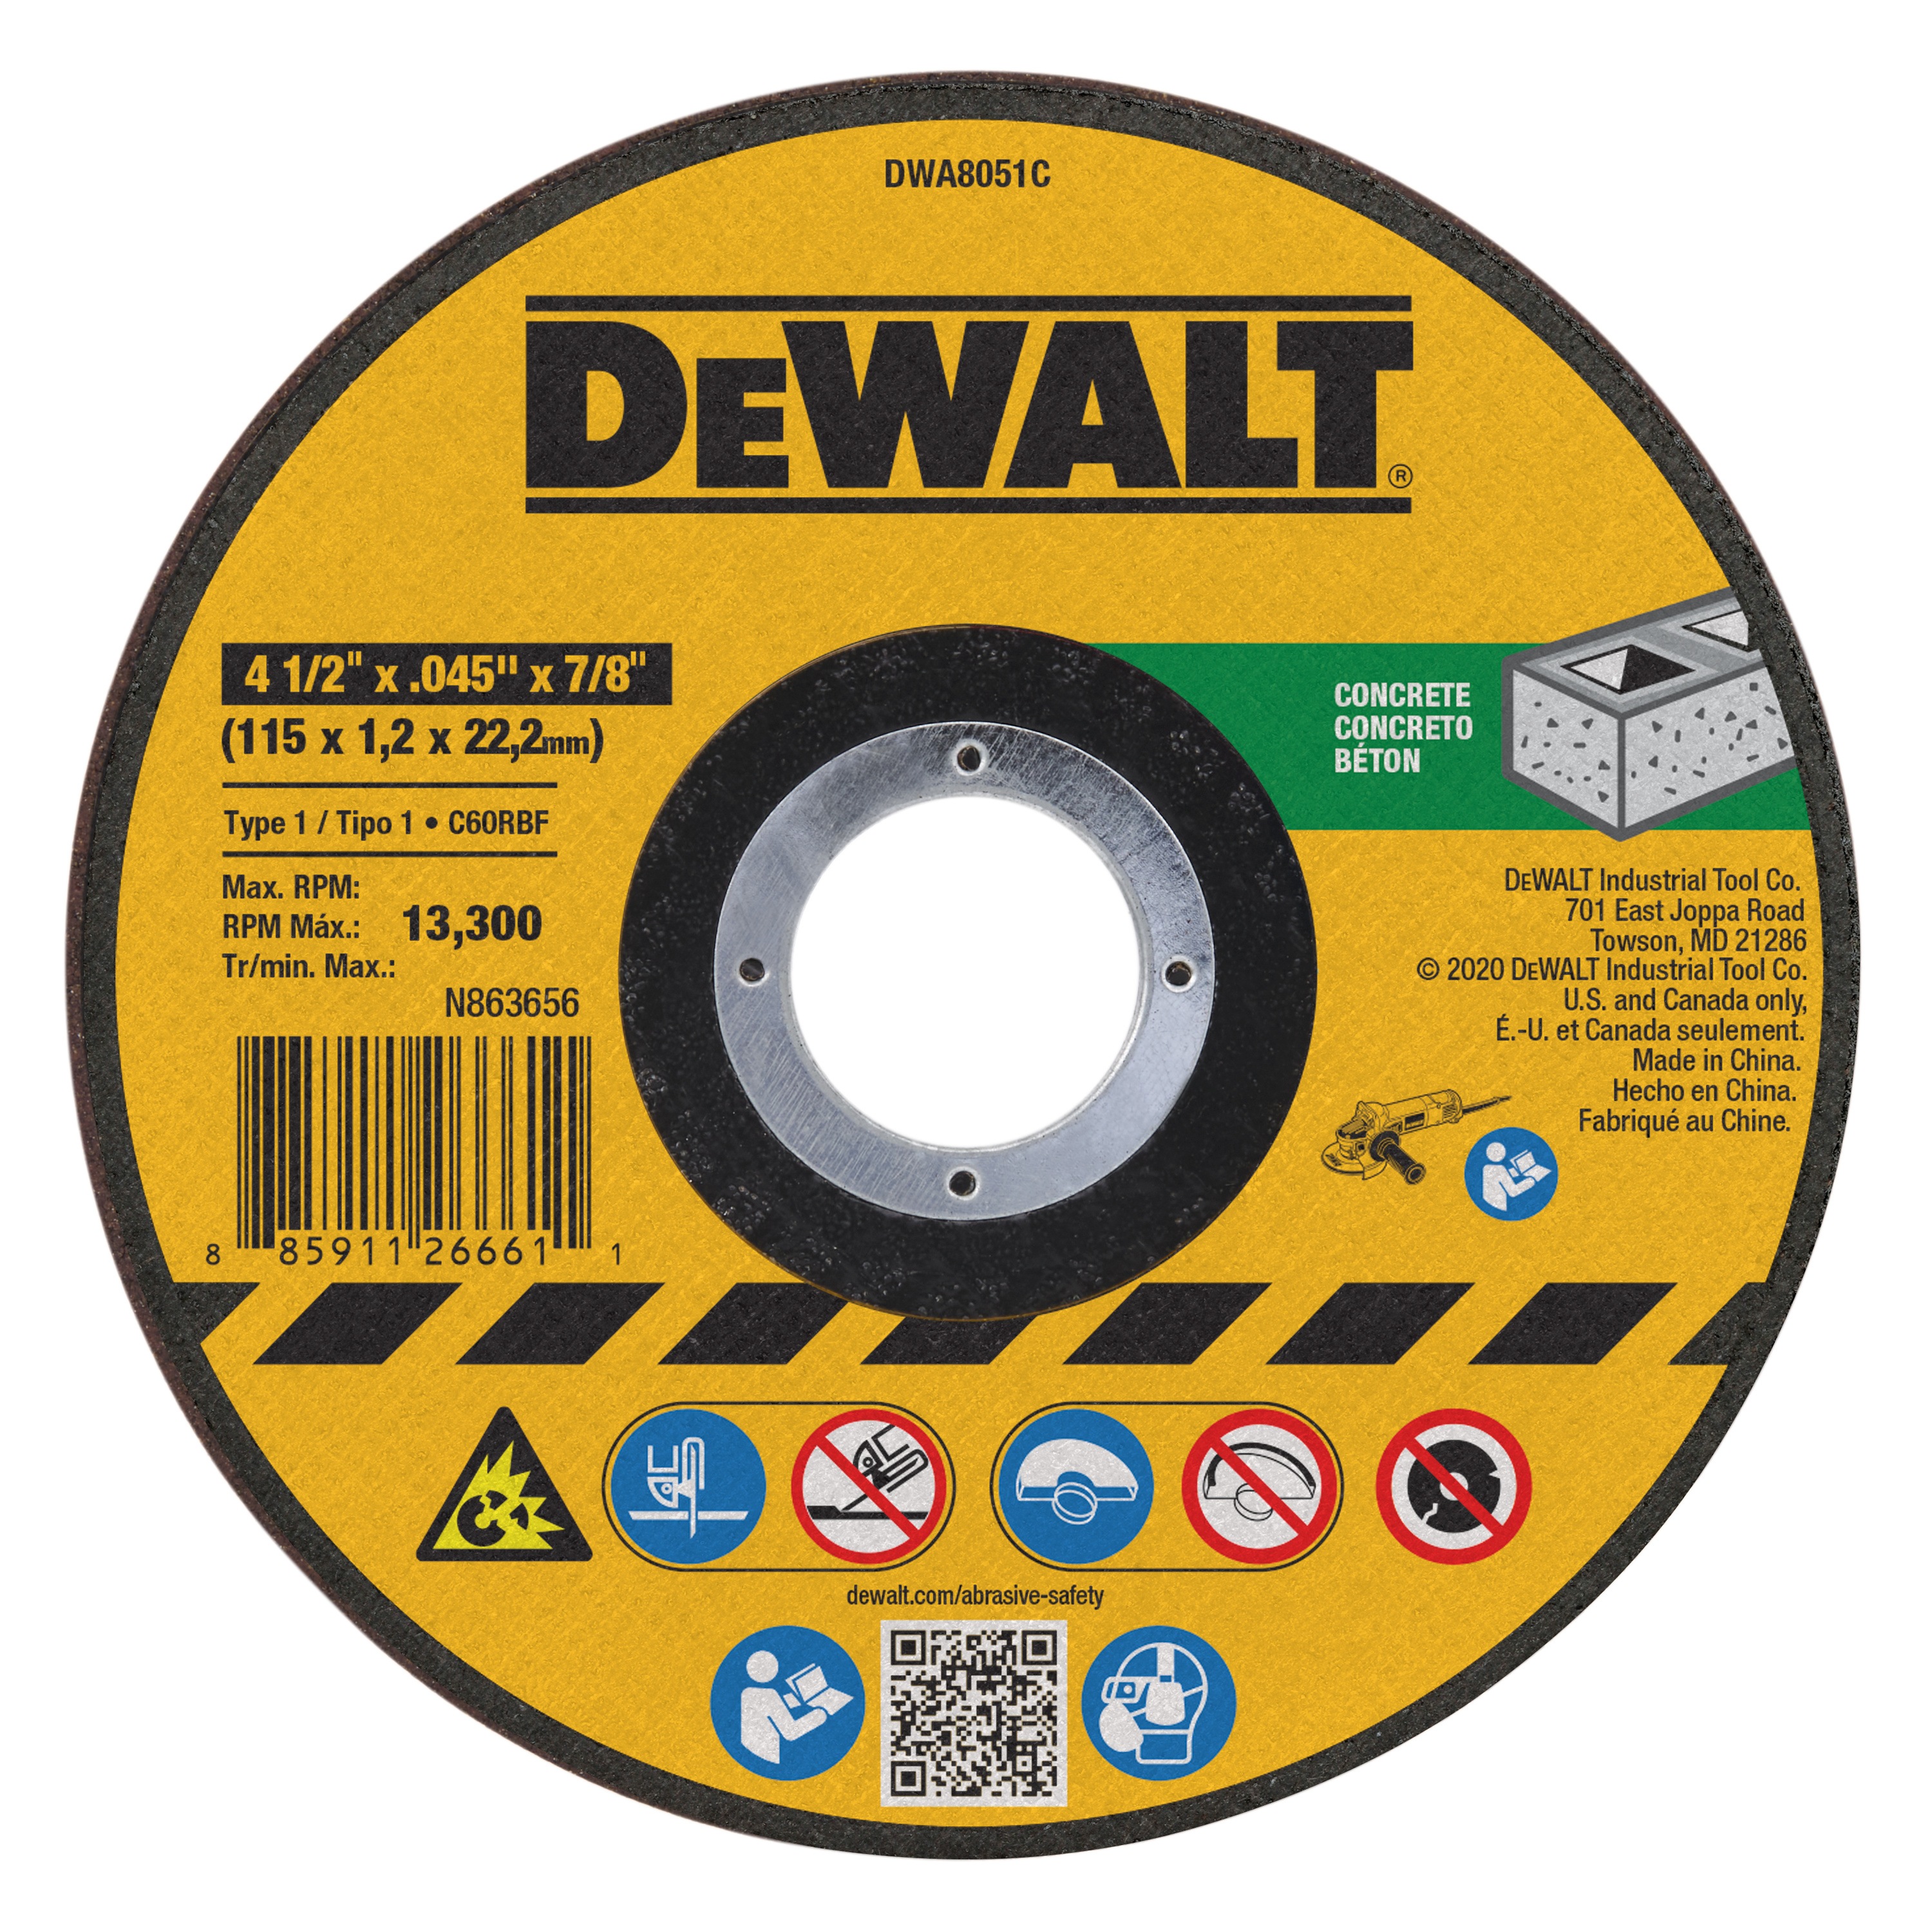 DEWALT - General Purpose Cutting Wheels  Concrete - DWA8051C